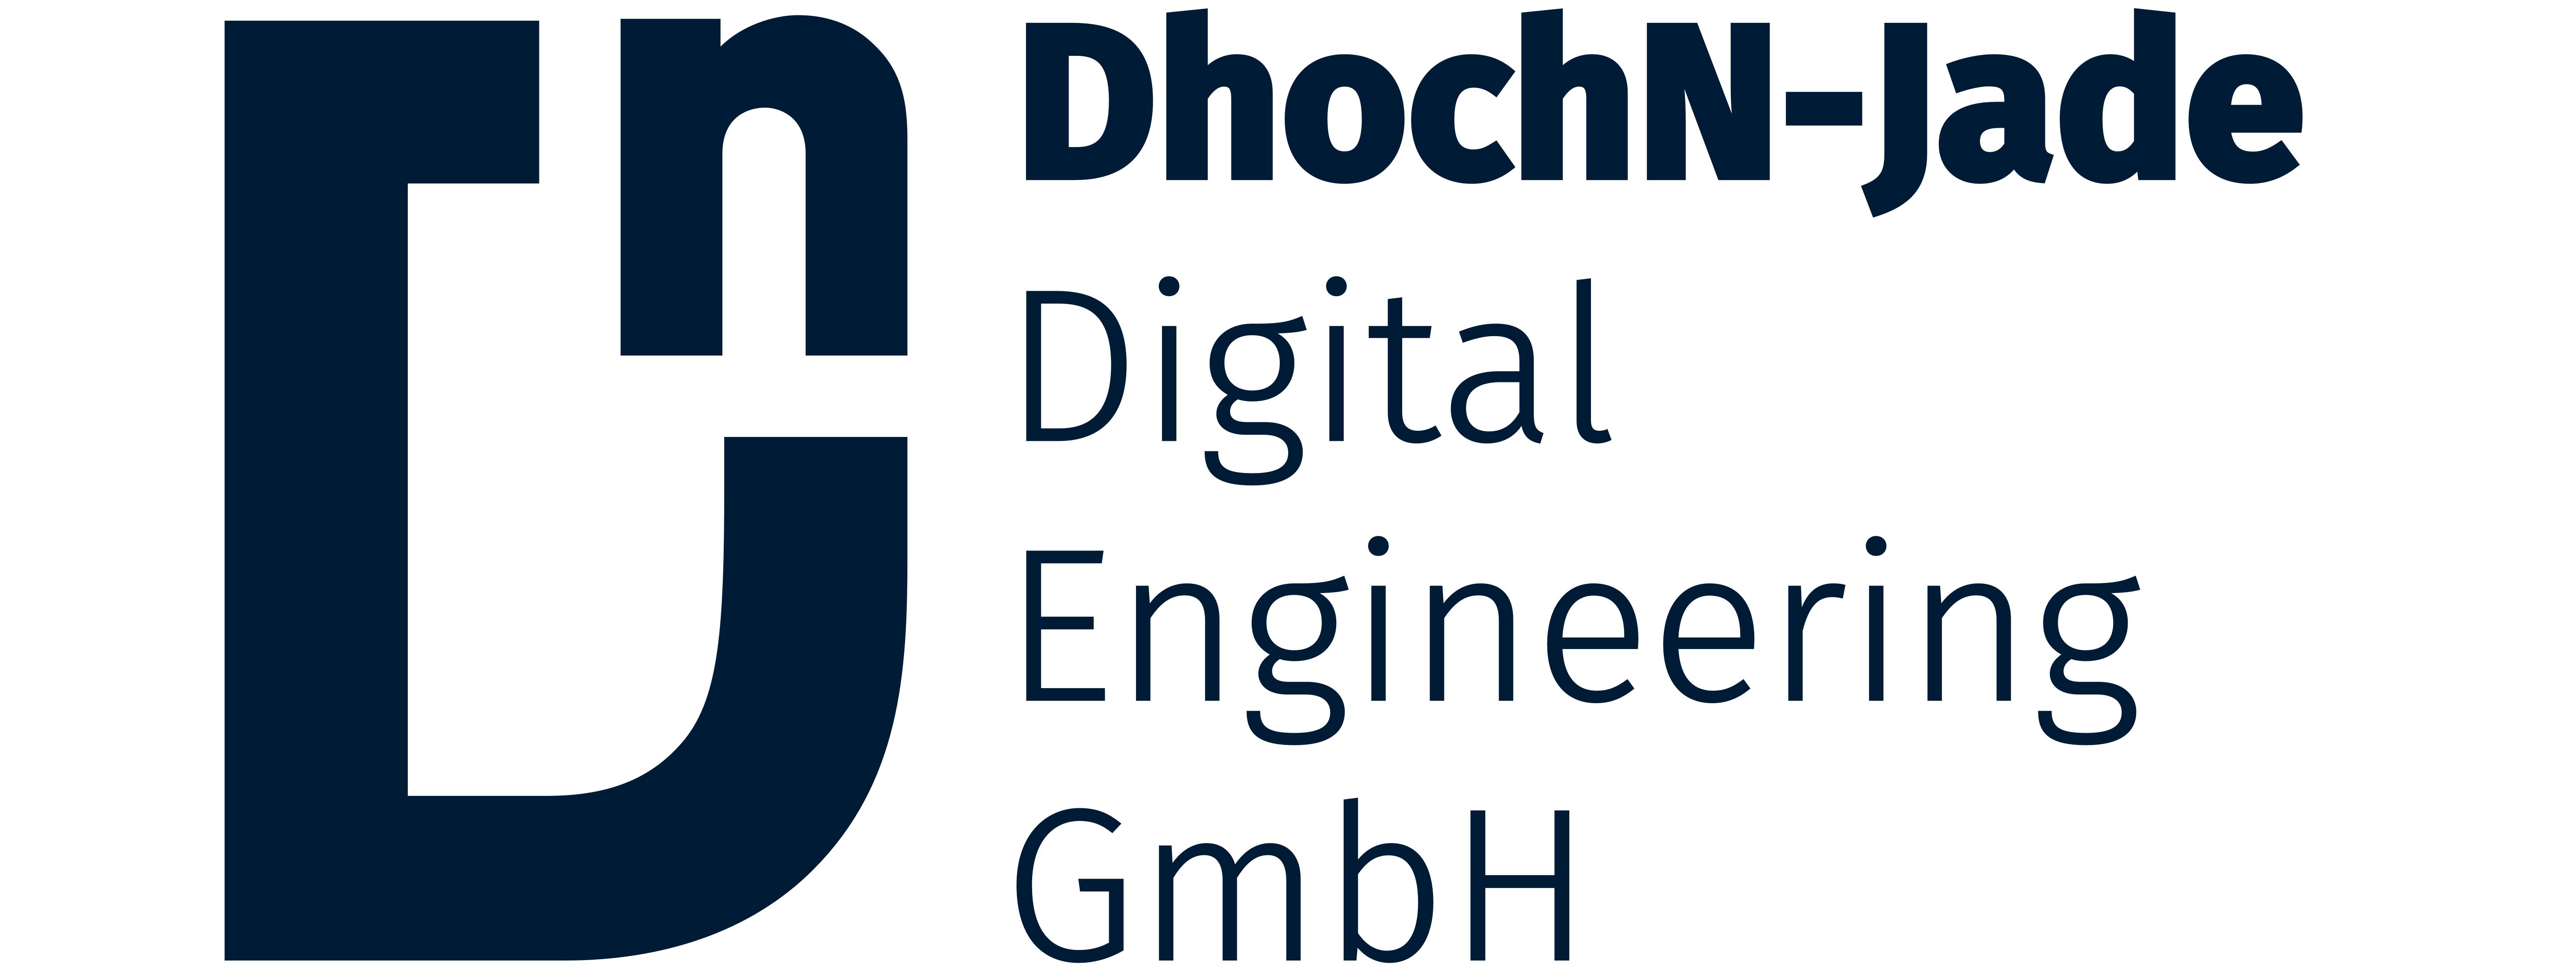 DhochN-Jade Digital Engineering GmbH